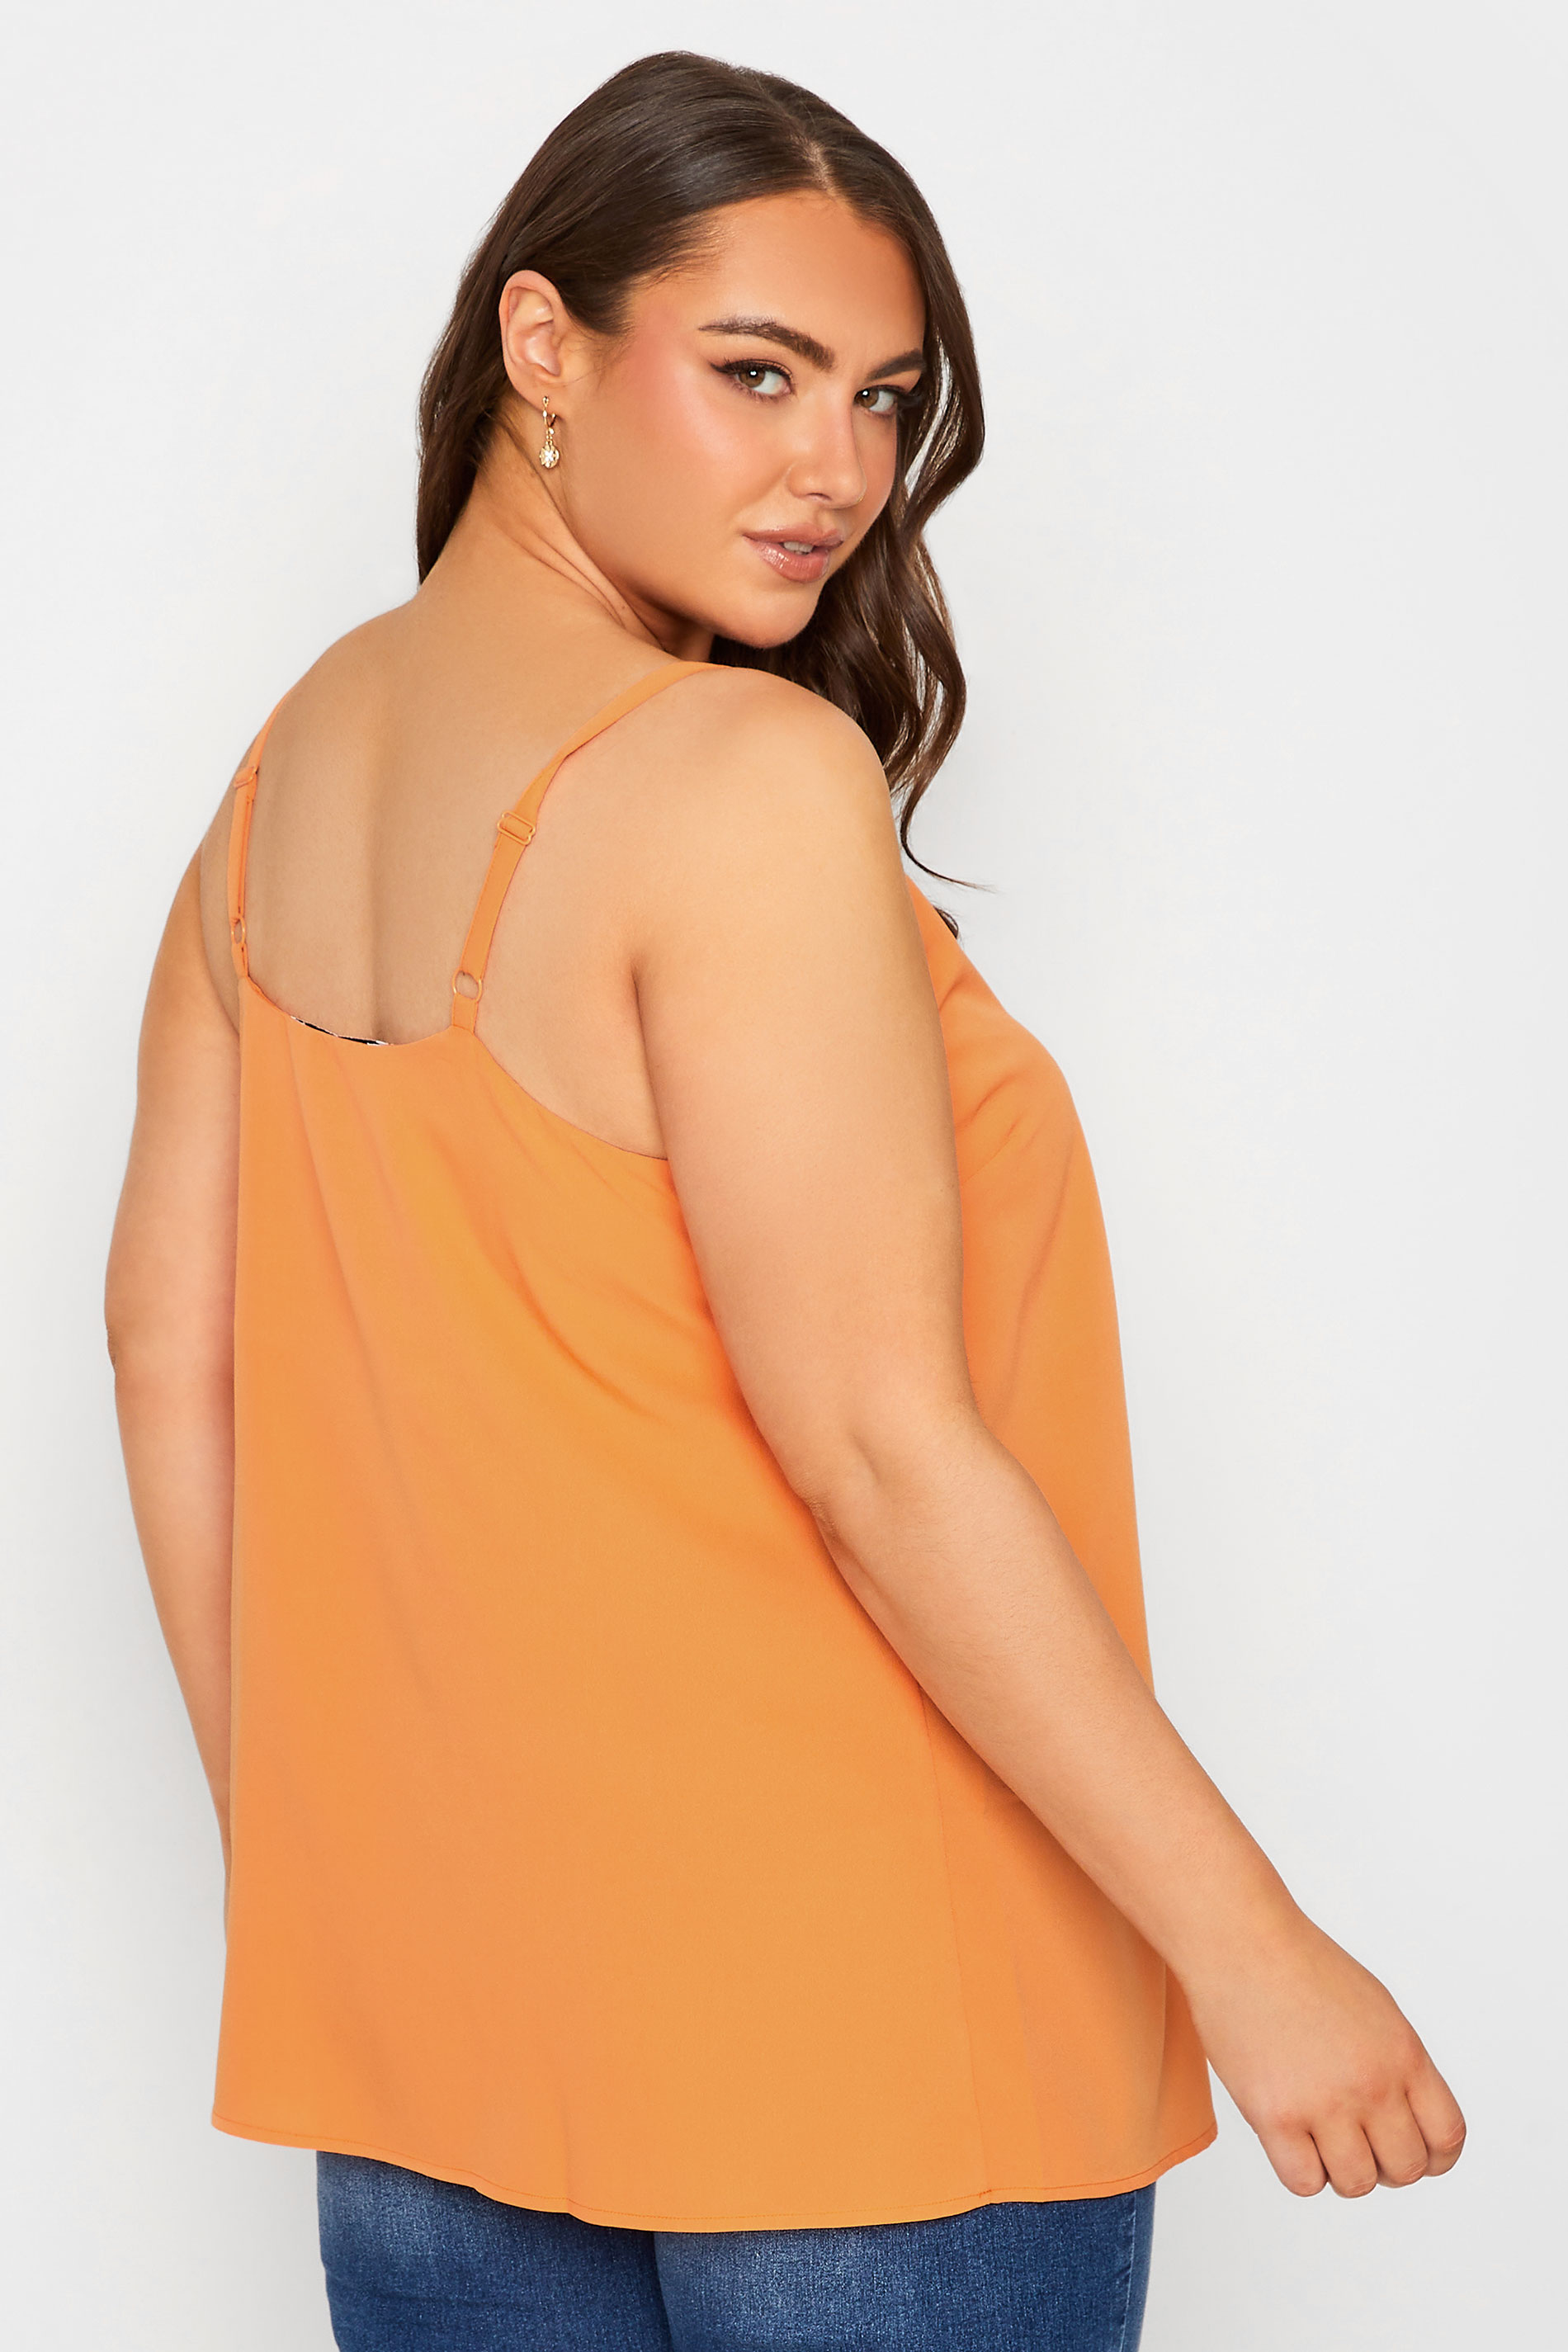 YOURS Curve Plus Size Orange Cami Vest Top | Yours Clothing  3